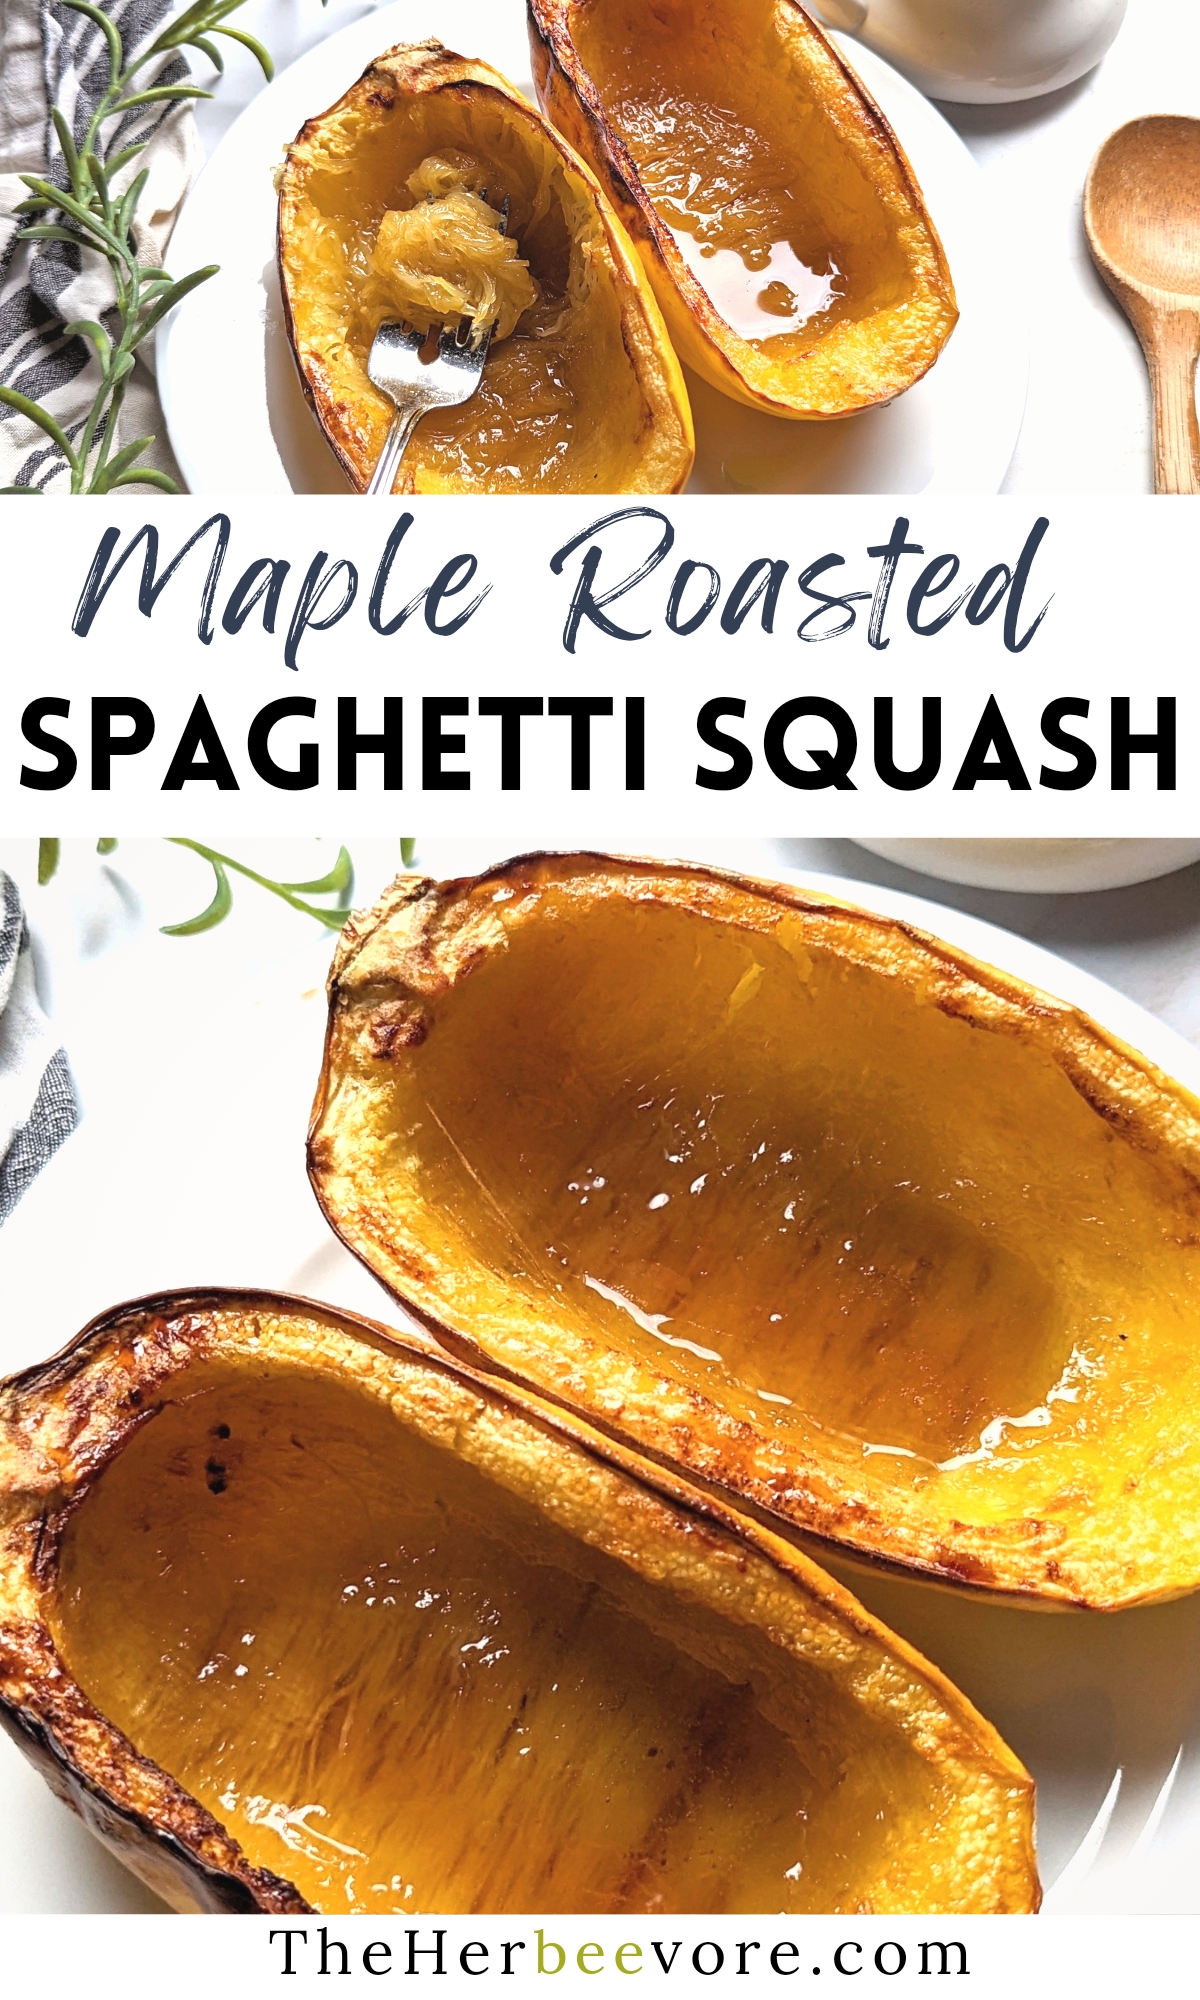 maple roasted spaghetti squash recipe vegetarian easy plant based sweet spaghetti squash ideas for side dishes holiday recipes